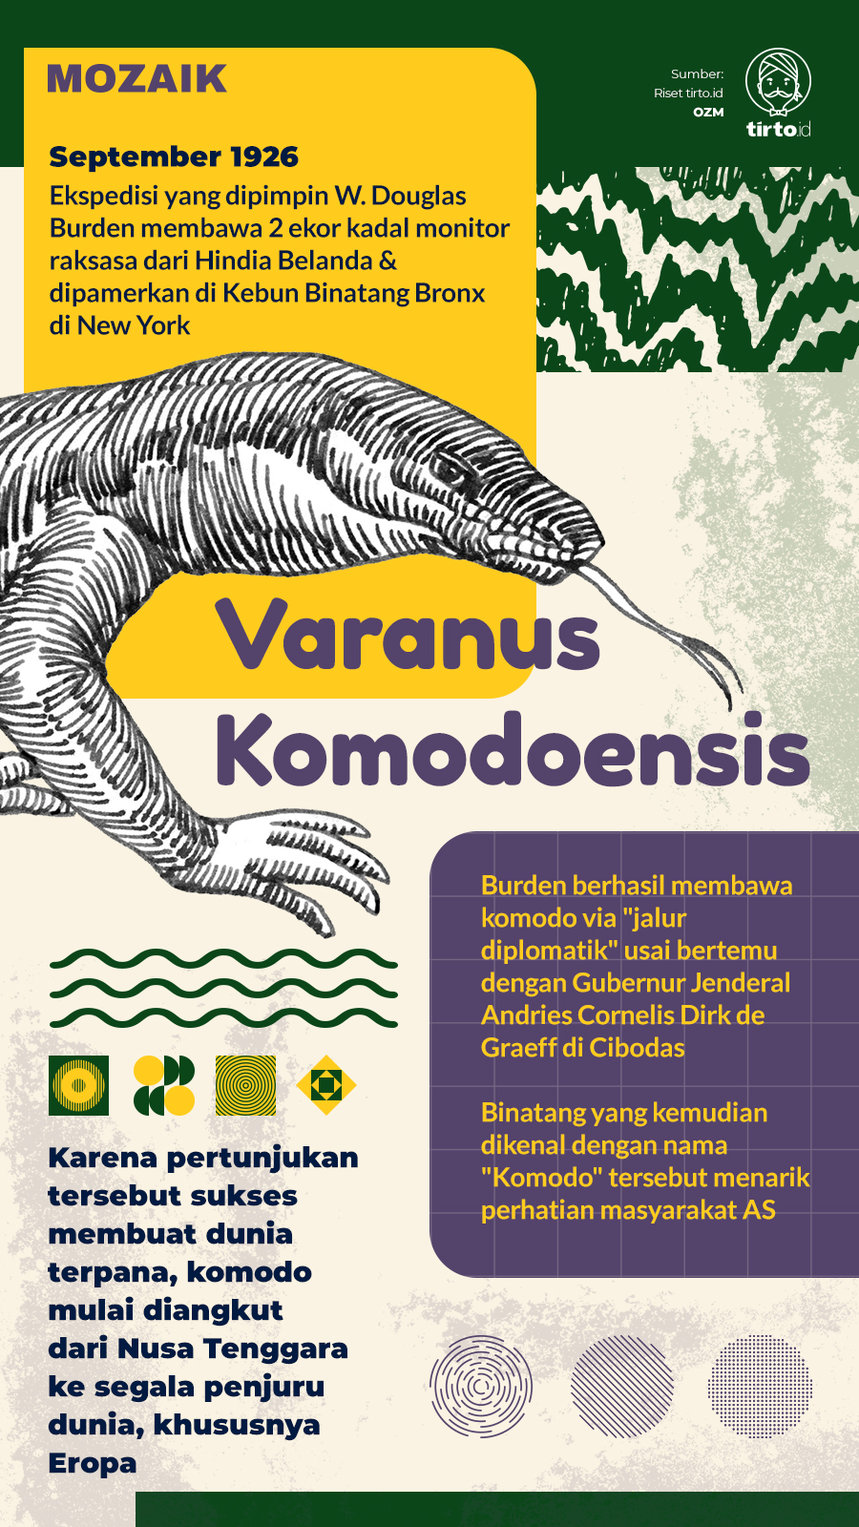 INfografik Mozaik Varanus komodoensis